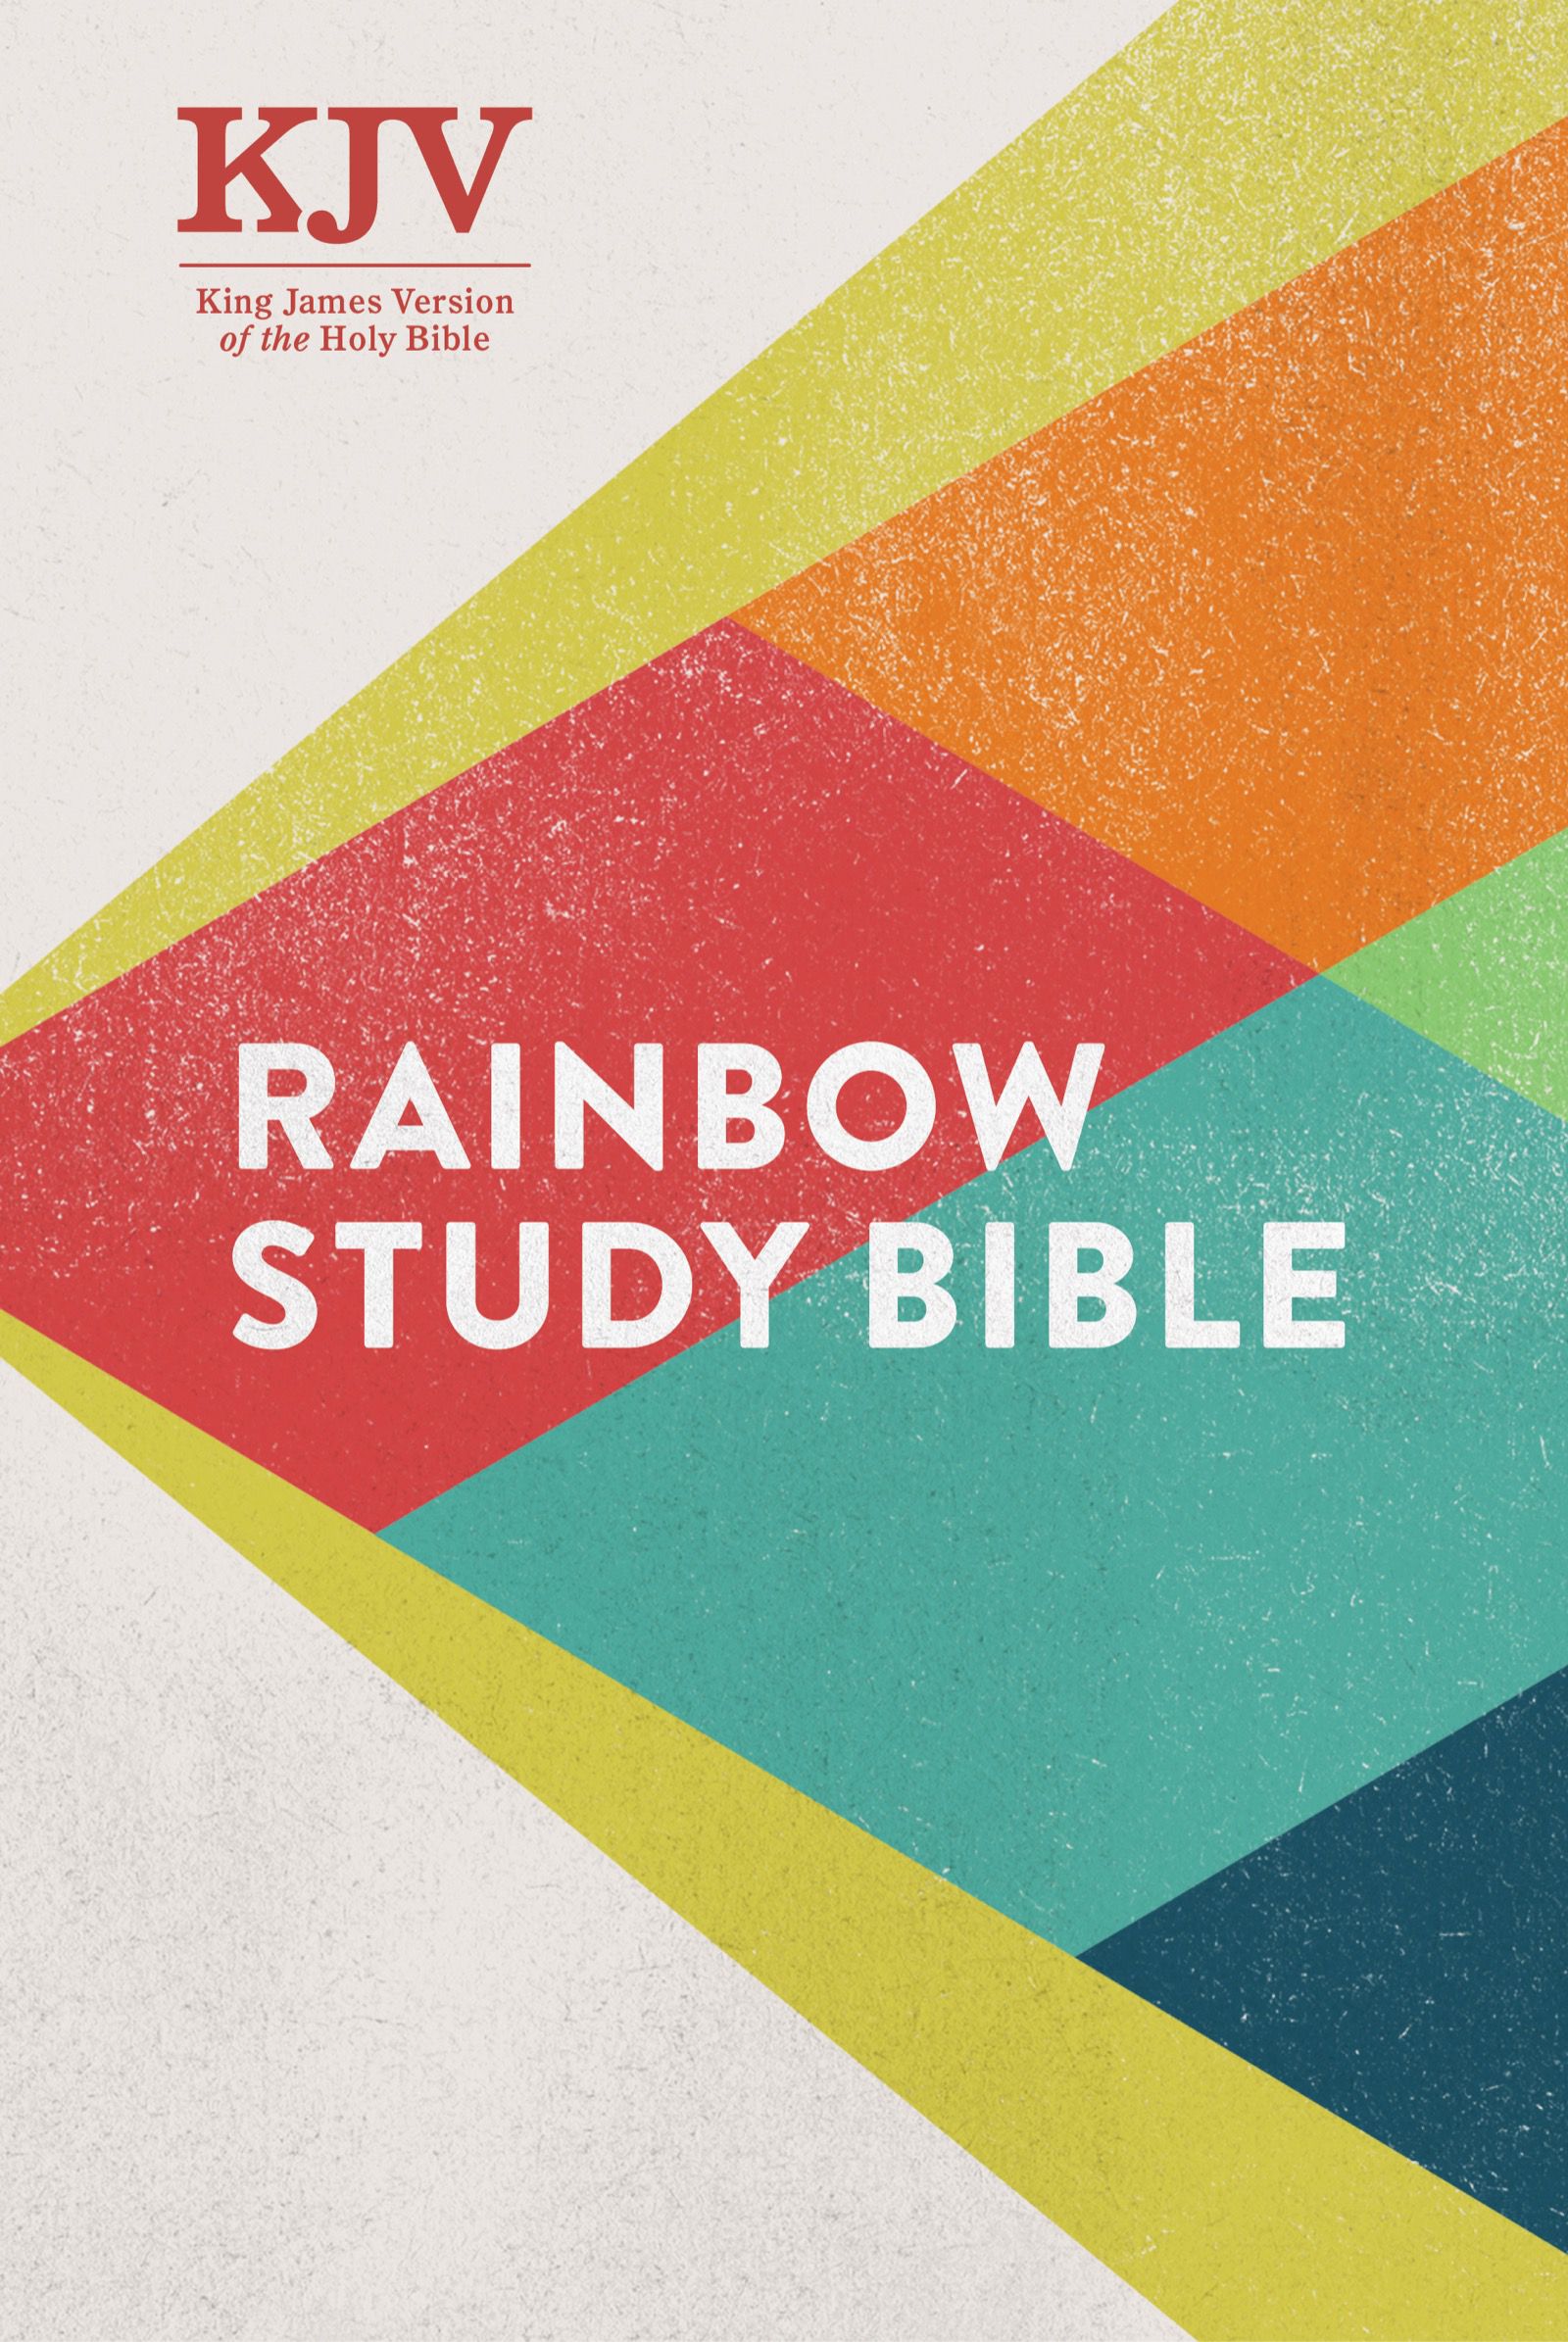 KJV Rainbow Study Bible